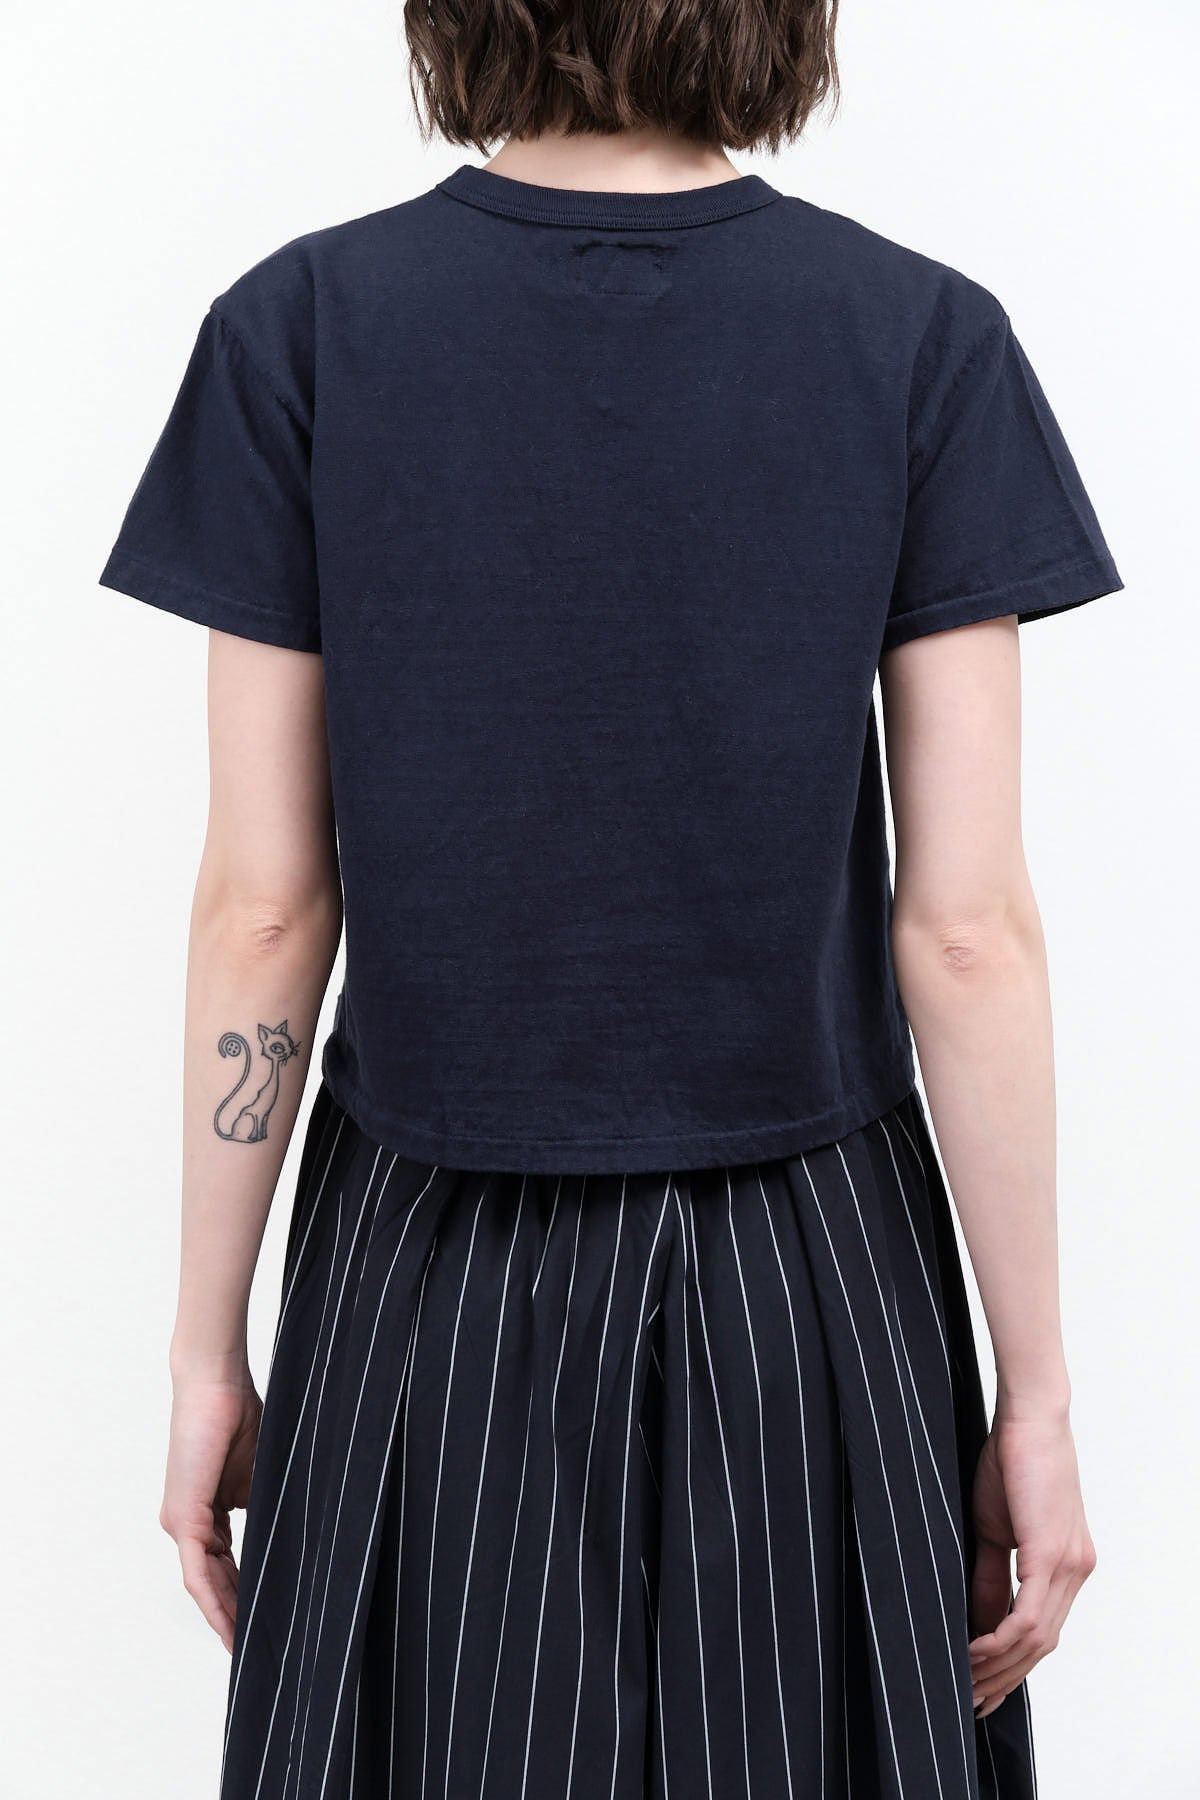 Dark Blue Short Sleeve Hi'aka T-shirt by Sunray Sportswear